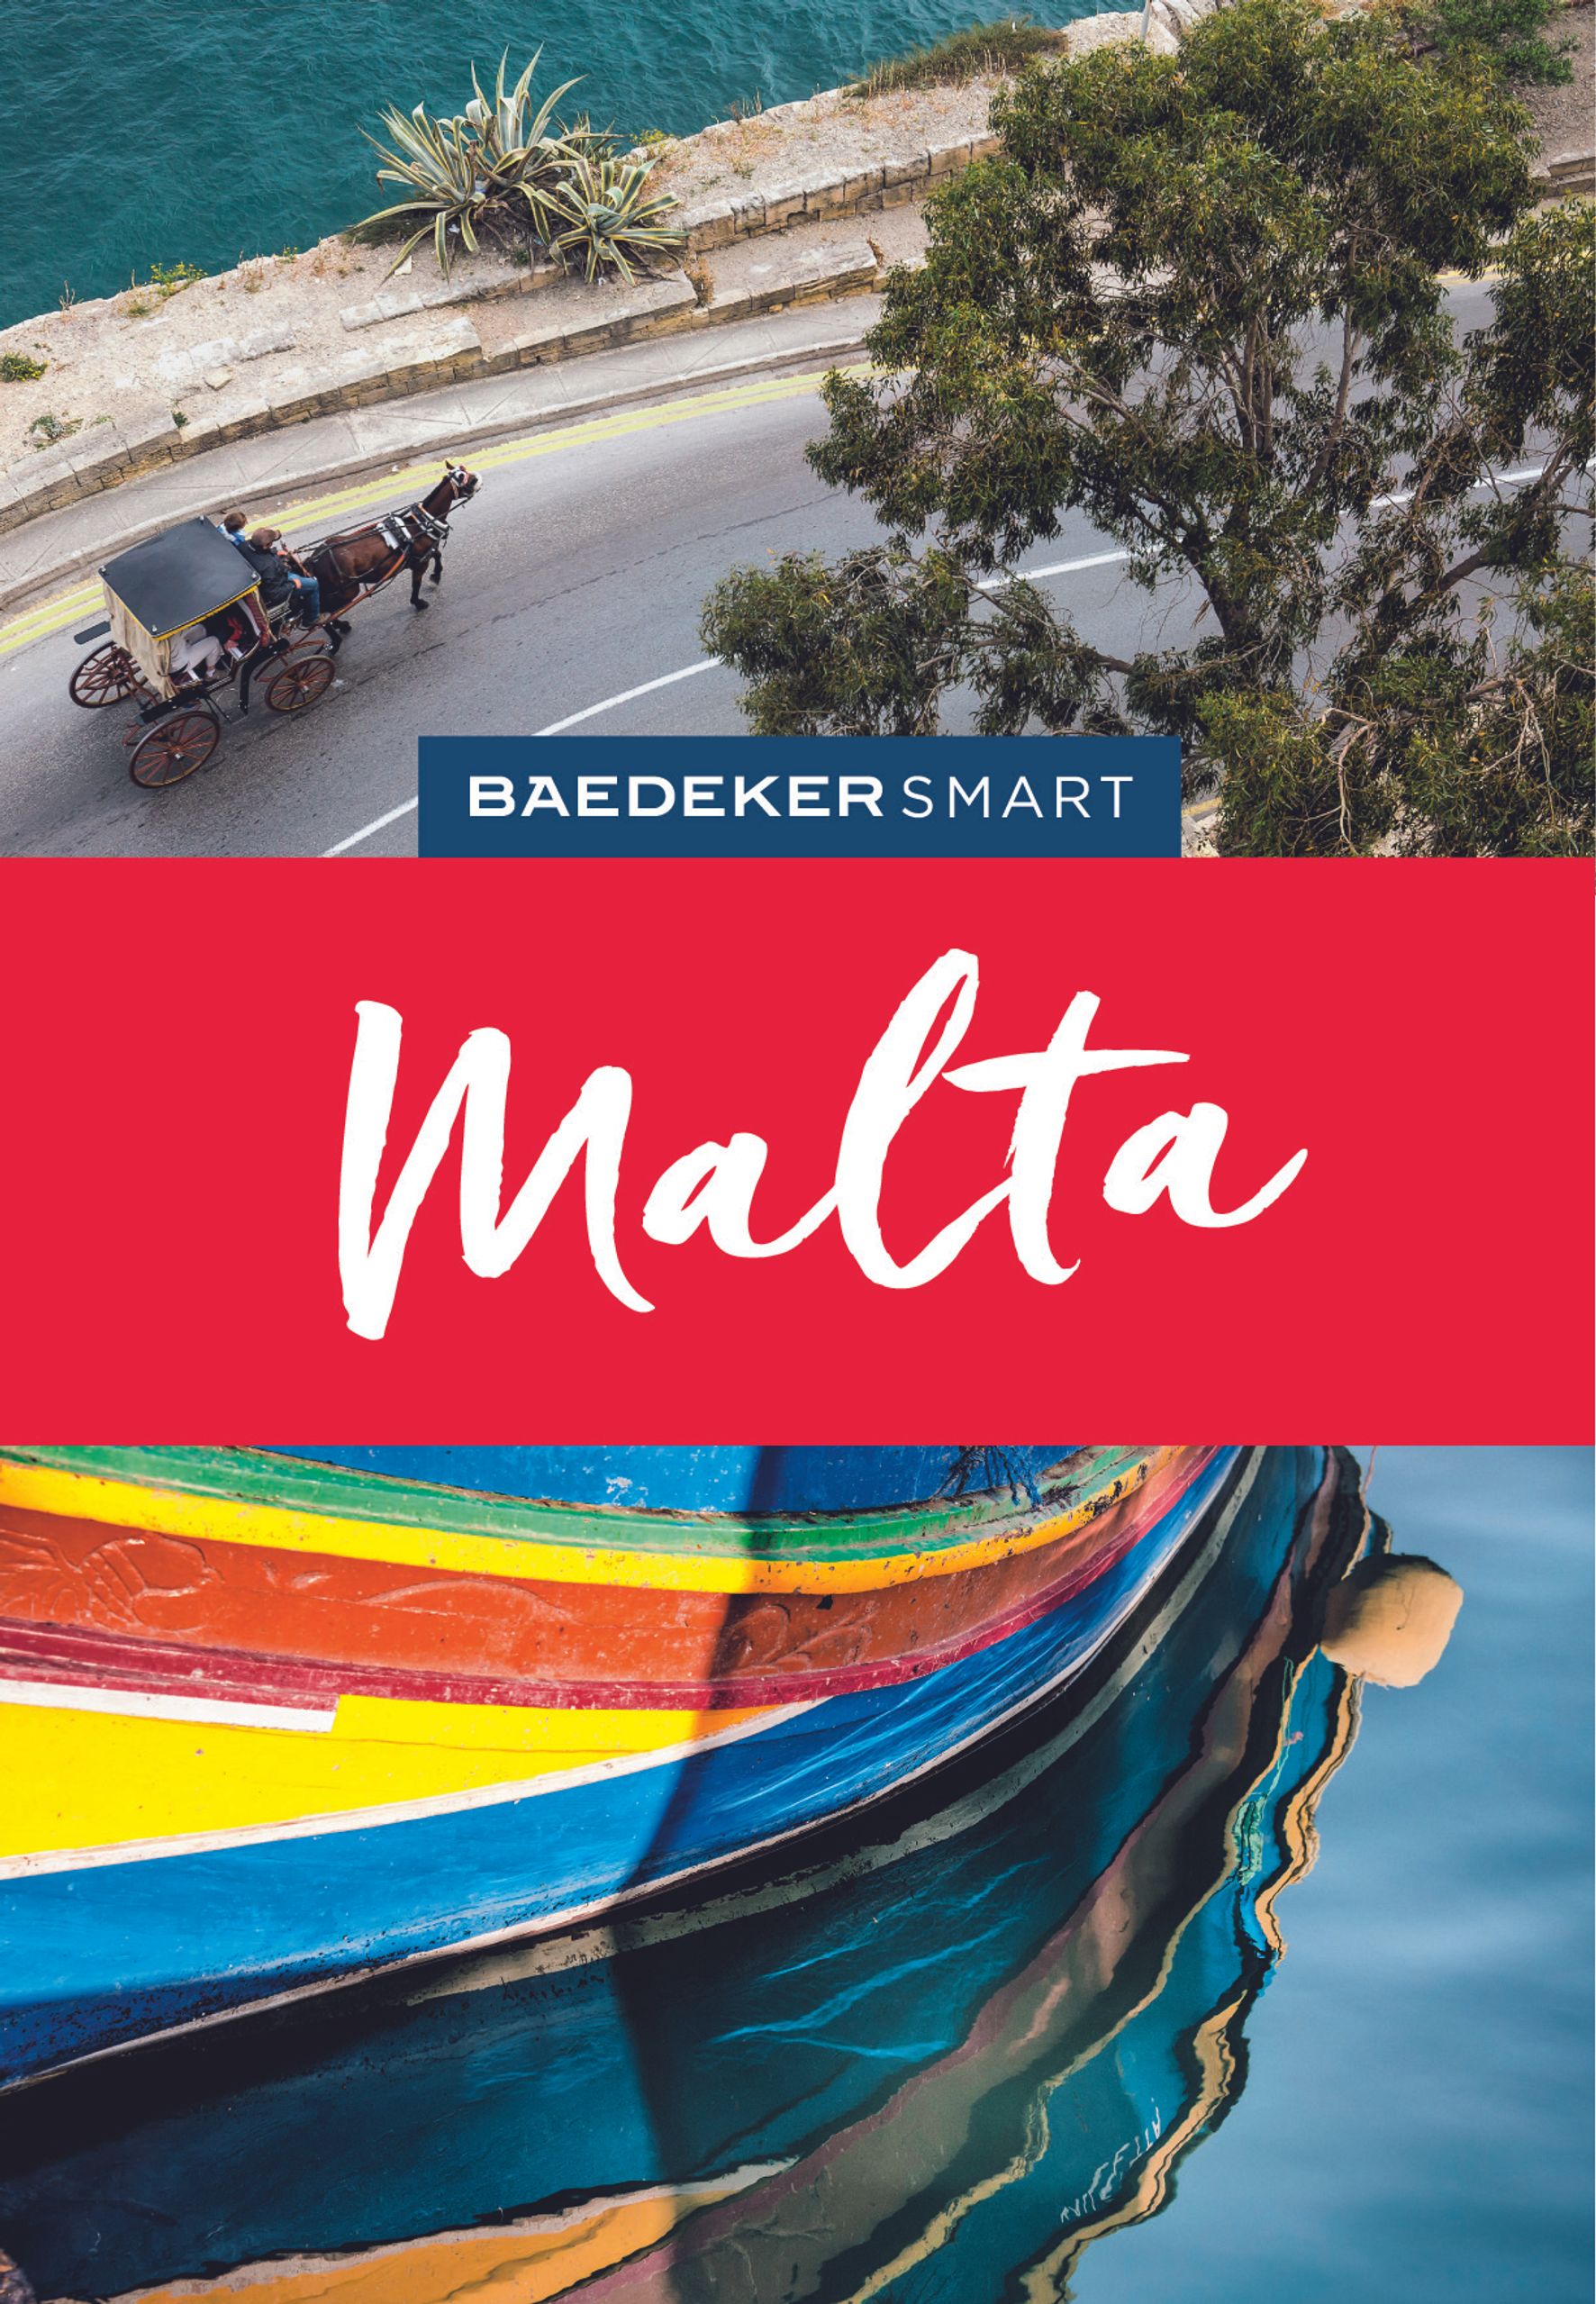 Baedeker Malta (eBook)